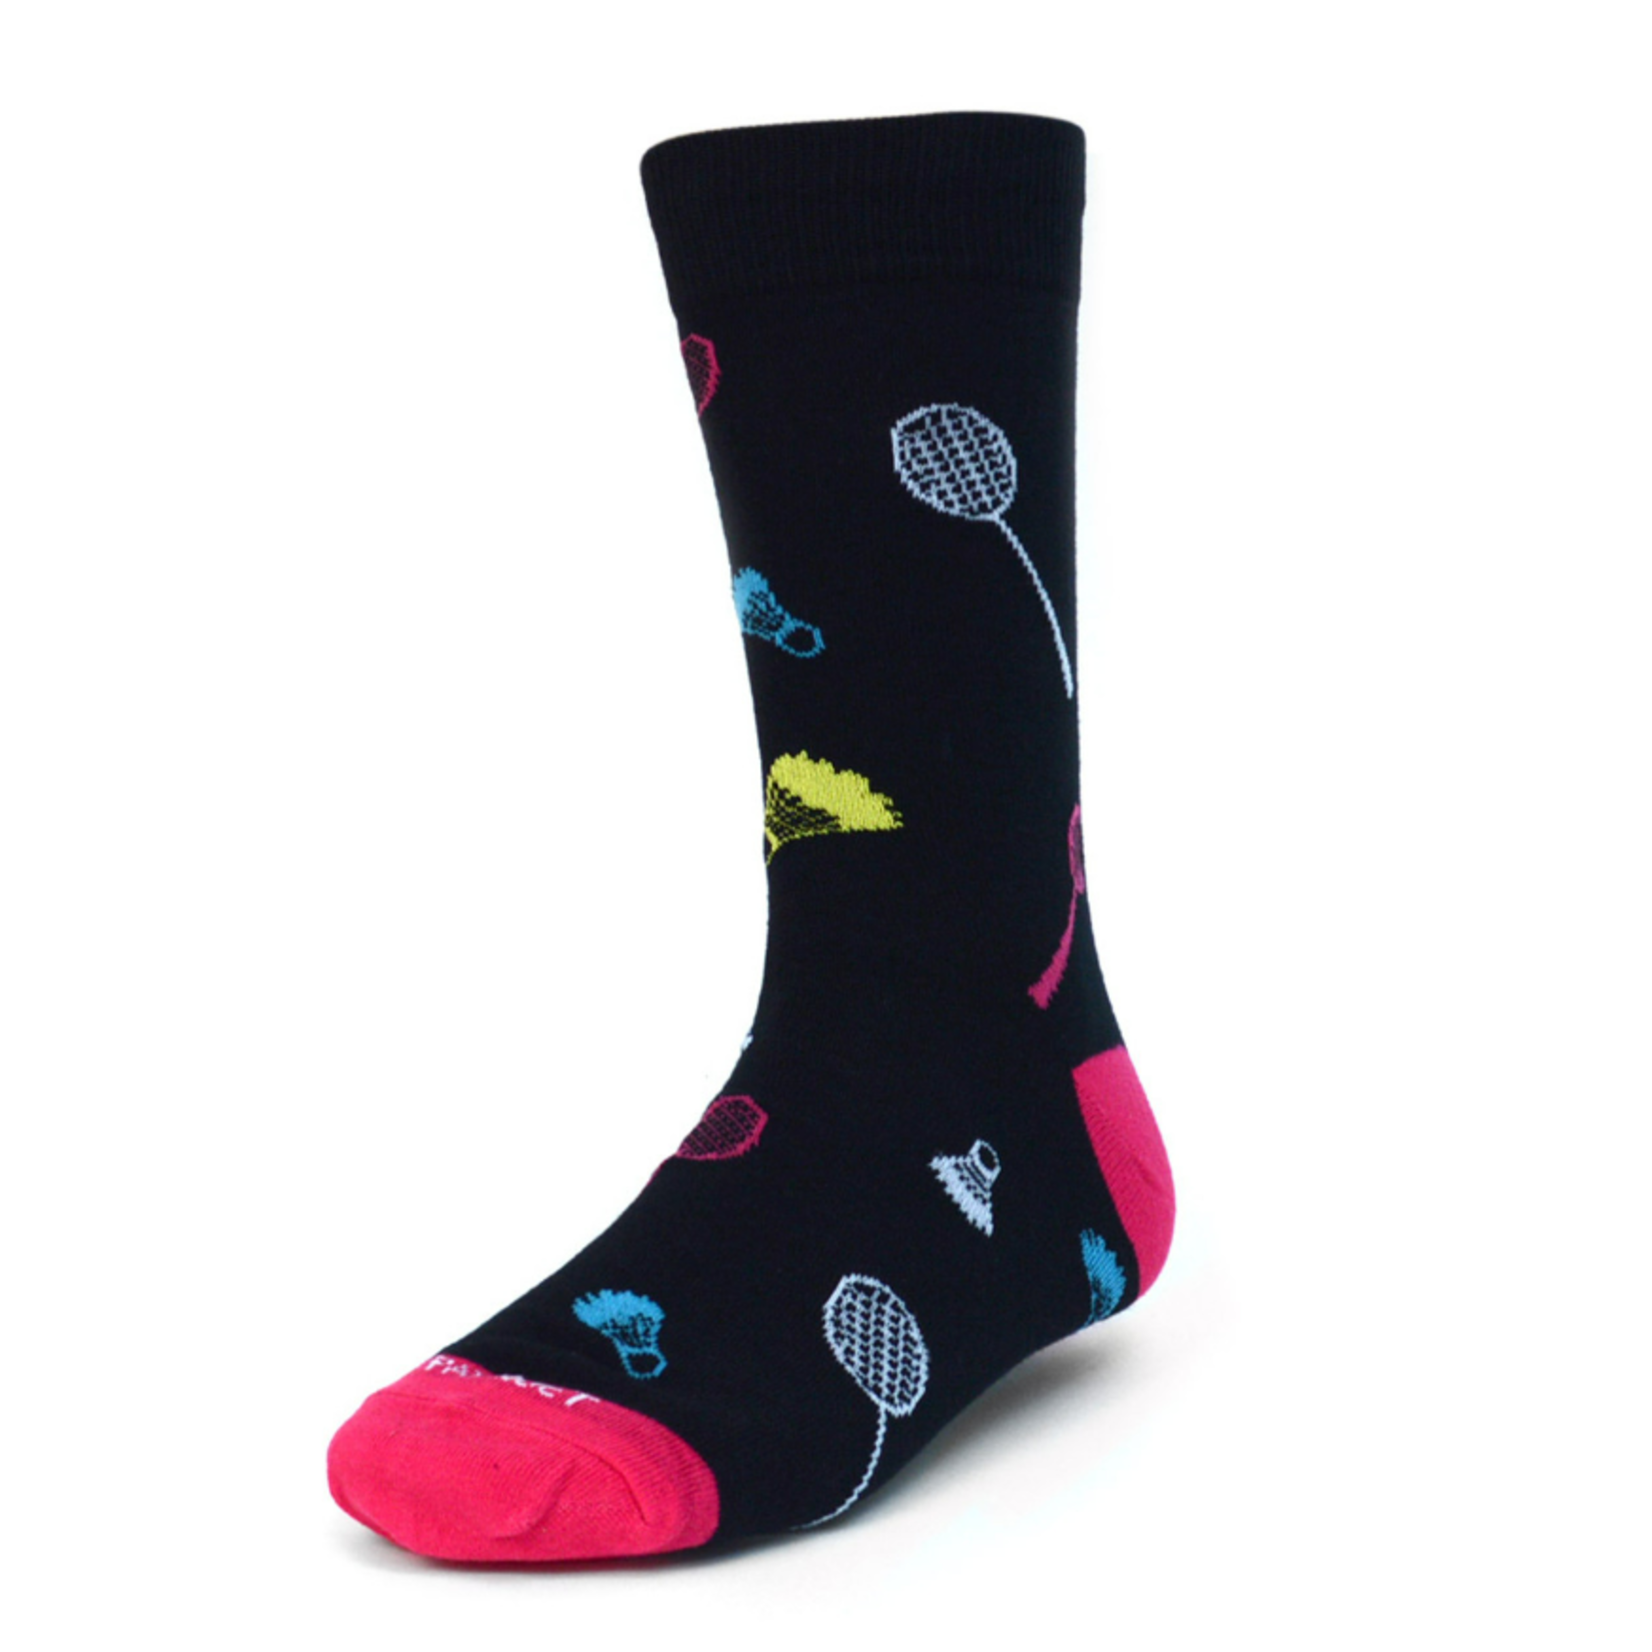 Selini Men's Badminton Premium Collection Novelty Socks